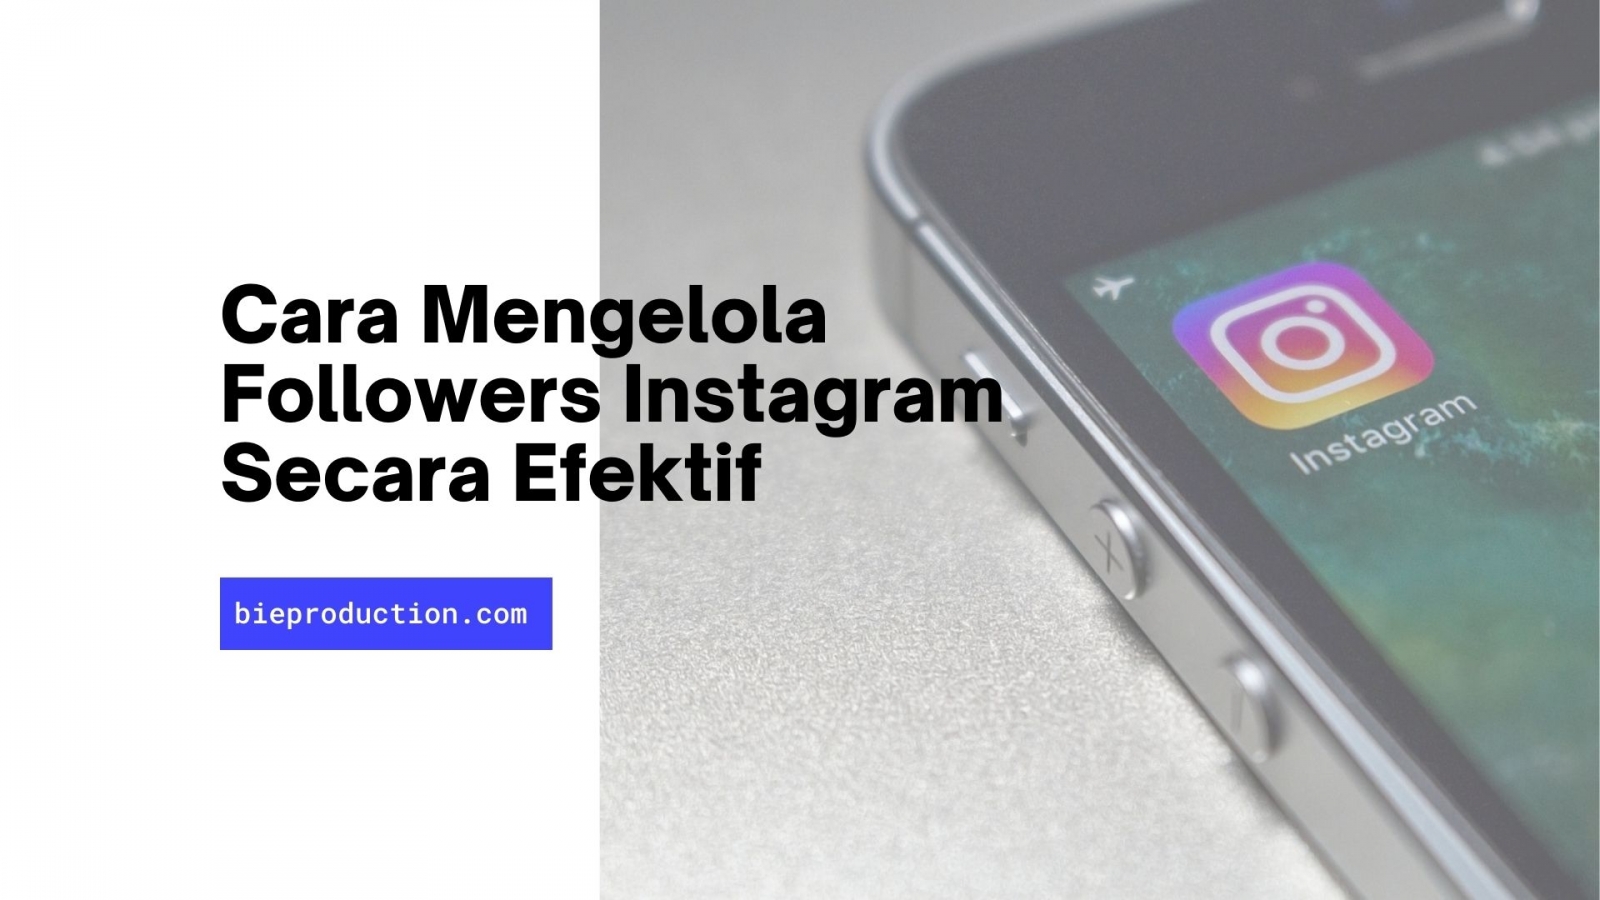 Cara Mengelola Followers Instagram Secara Efektif